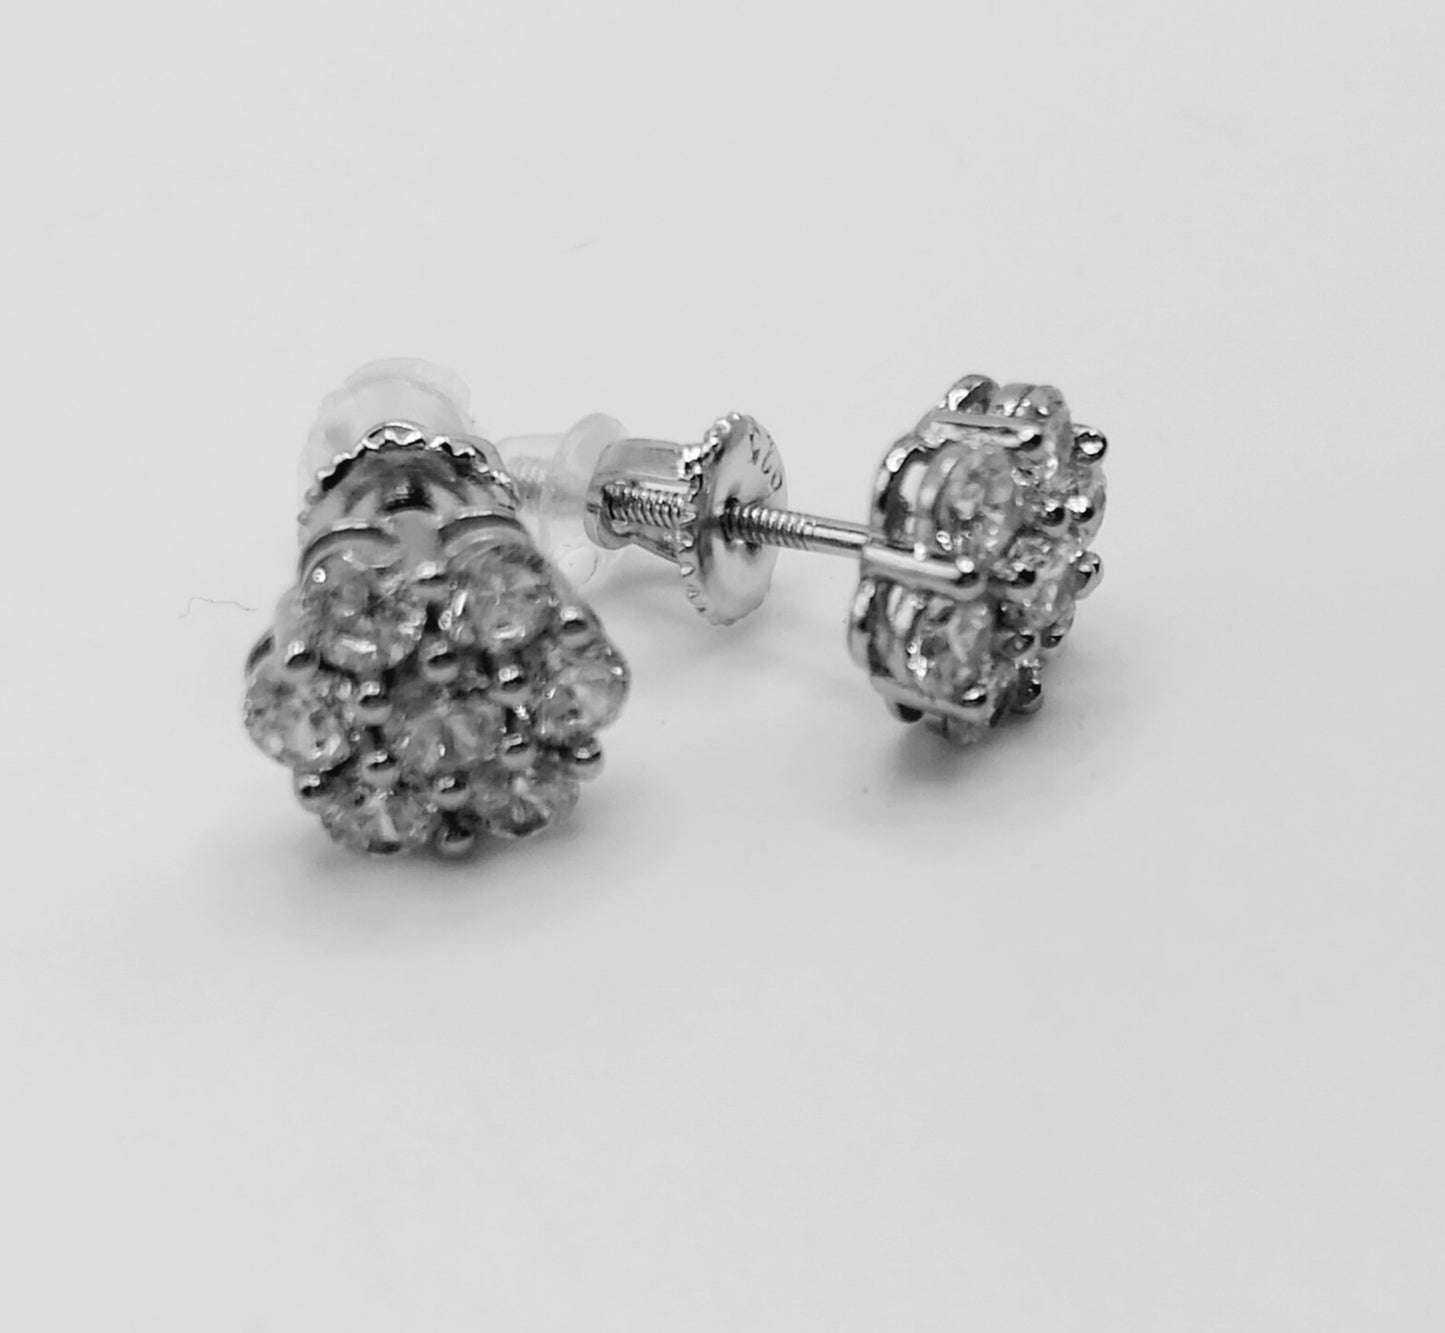 Flower Shape Stud Earrings with White Cubic Zirconia Stones